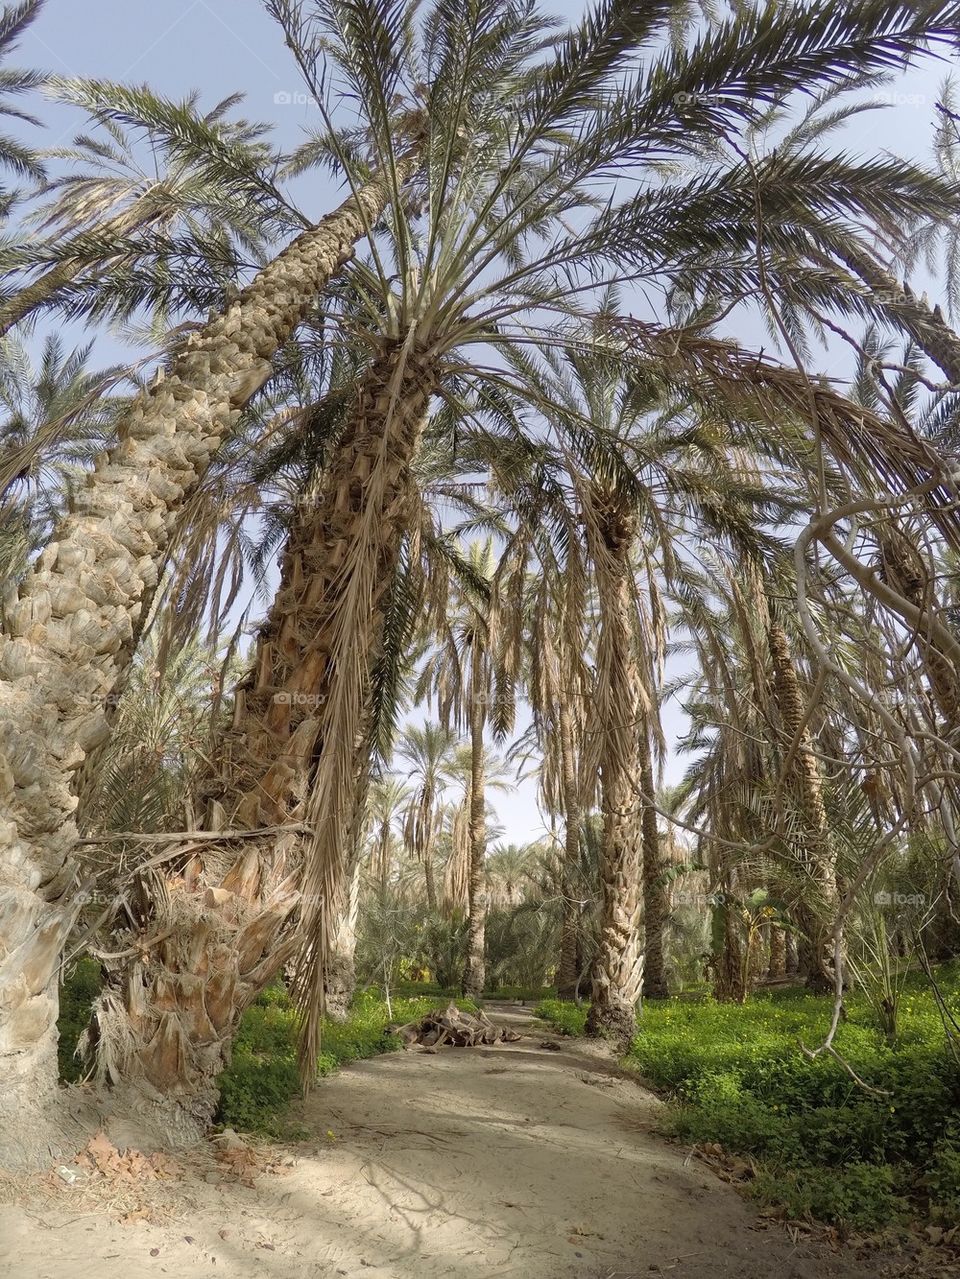 Date palm trees in a desert in a desert oasis in Tunisia  